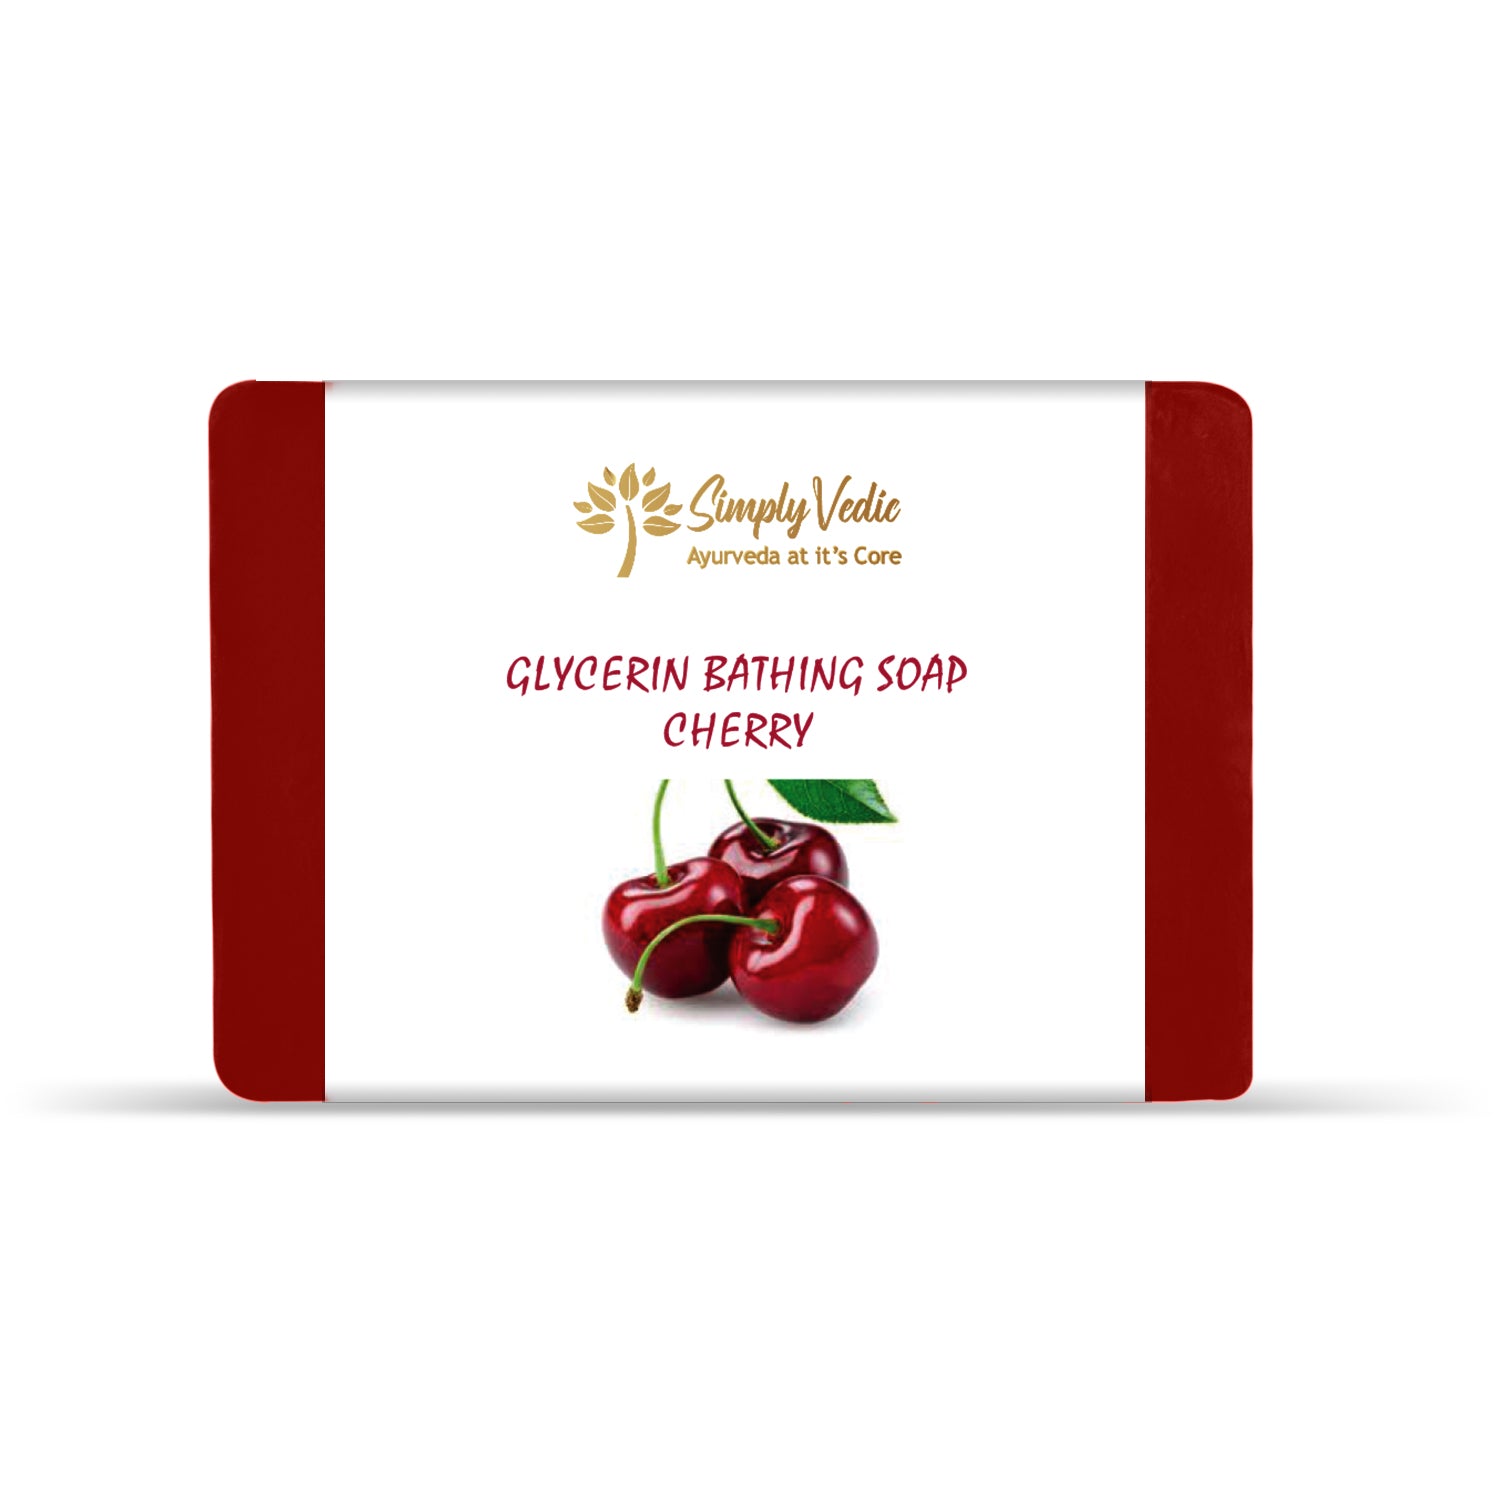 Simply Vedic's Cherry Glycerin Soap